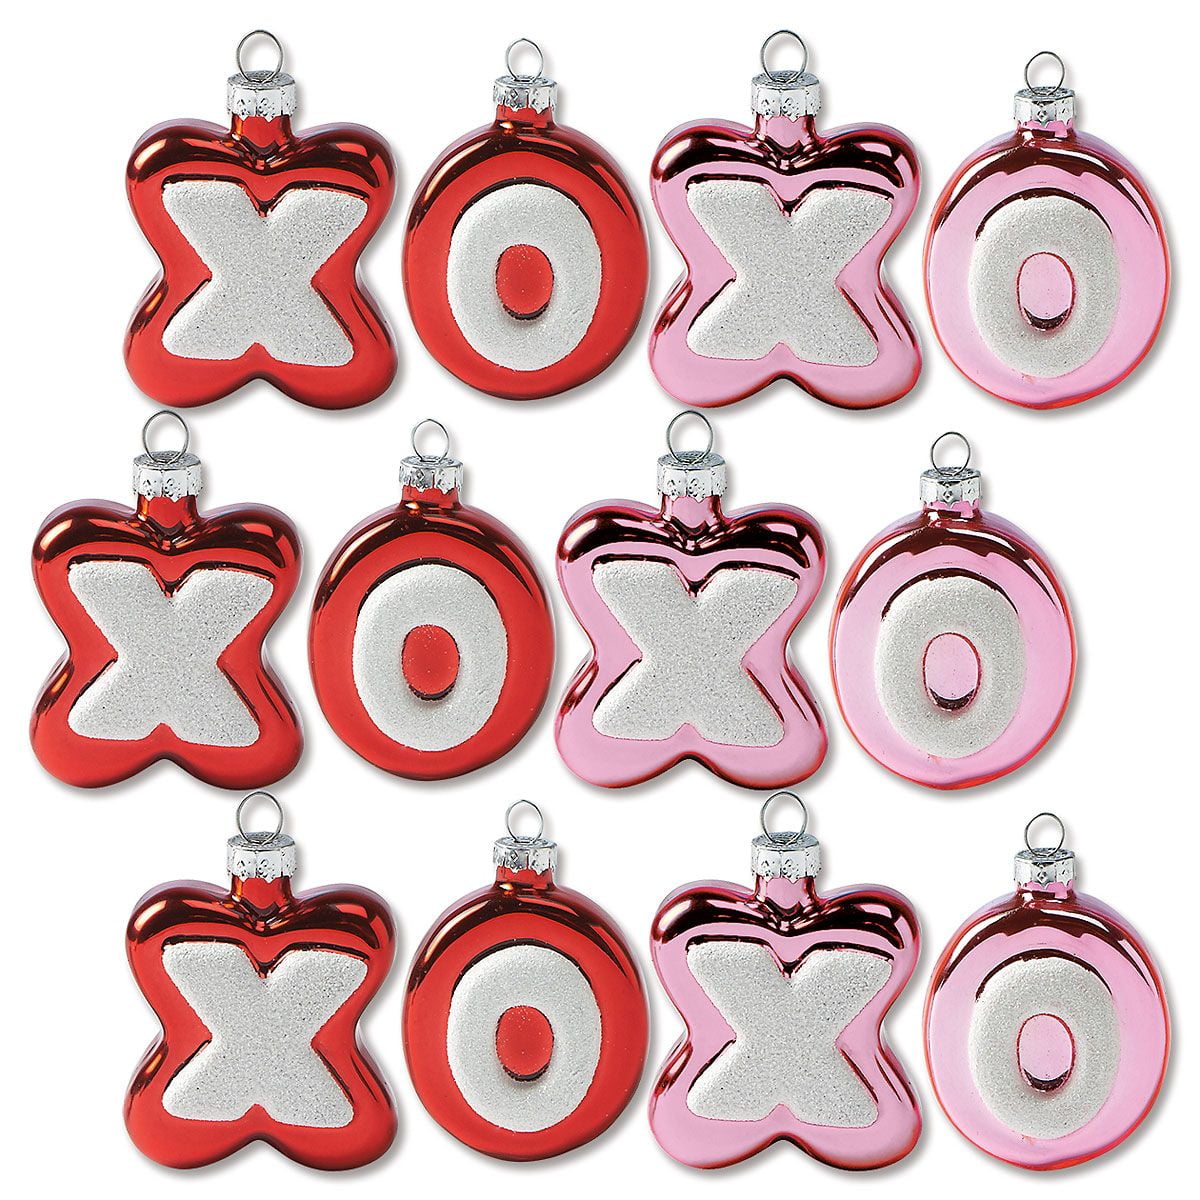 Shiny Glass Hearts Valentine's Day Ornaments - Set of 12, Holiday